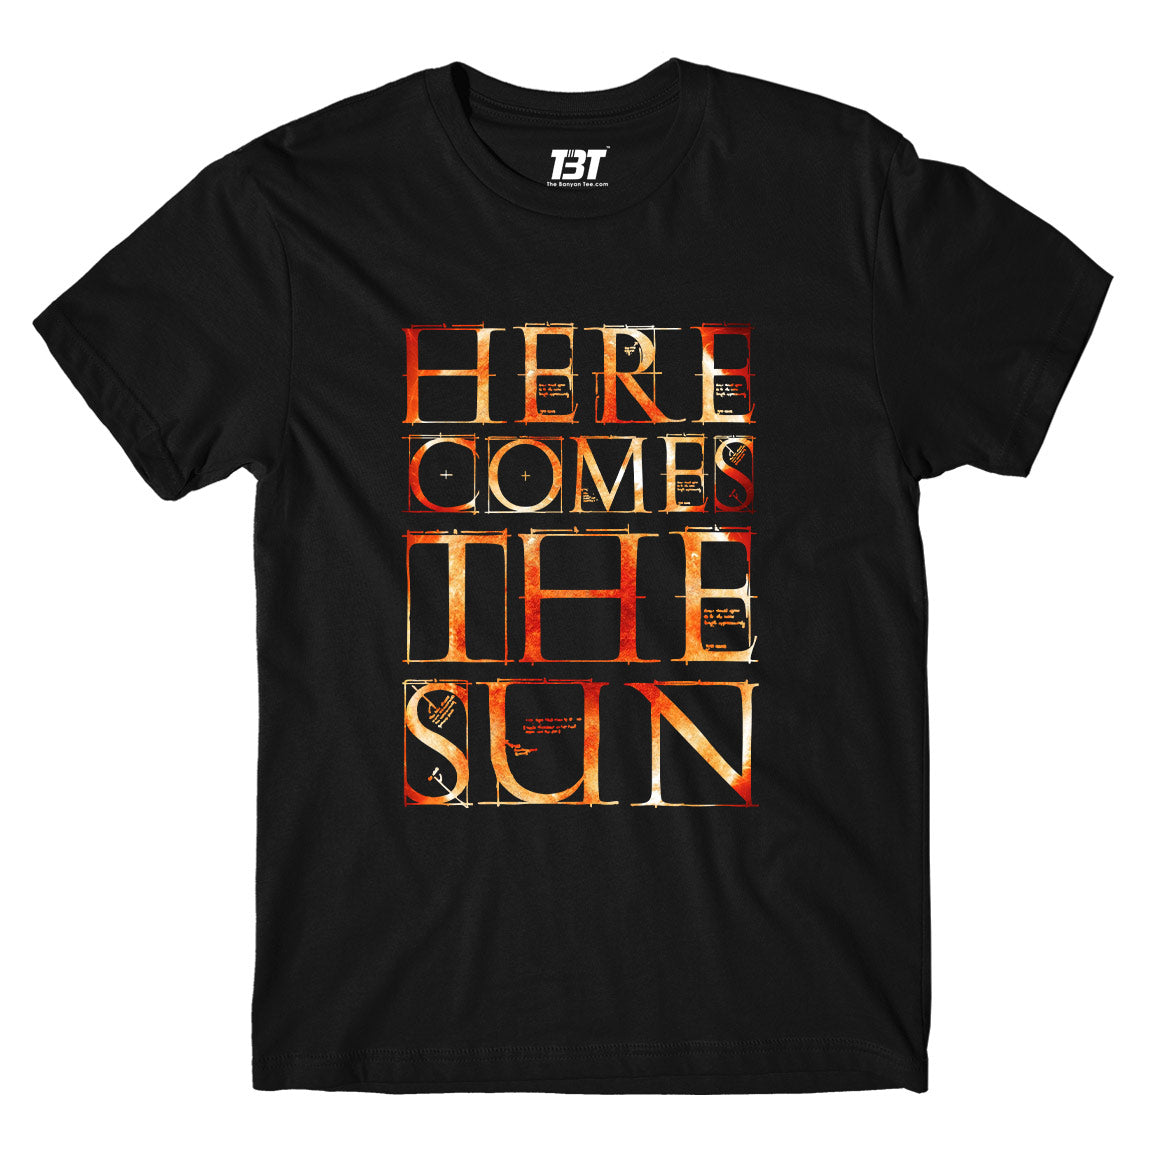 The Beatles T-shirt - Here Comes The Sun T-shirt The Banyan Tee TBT shirt for men women boys designer stylish online cotton india